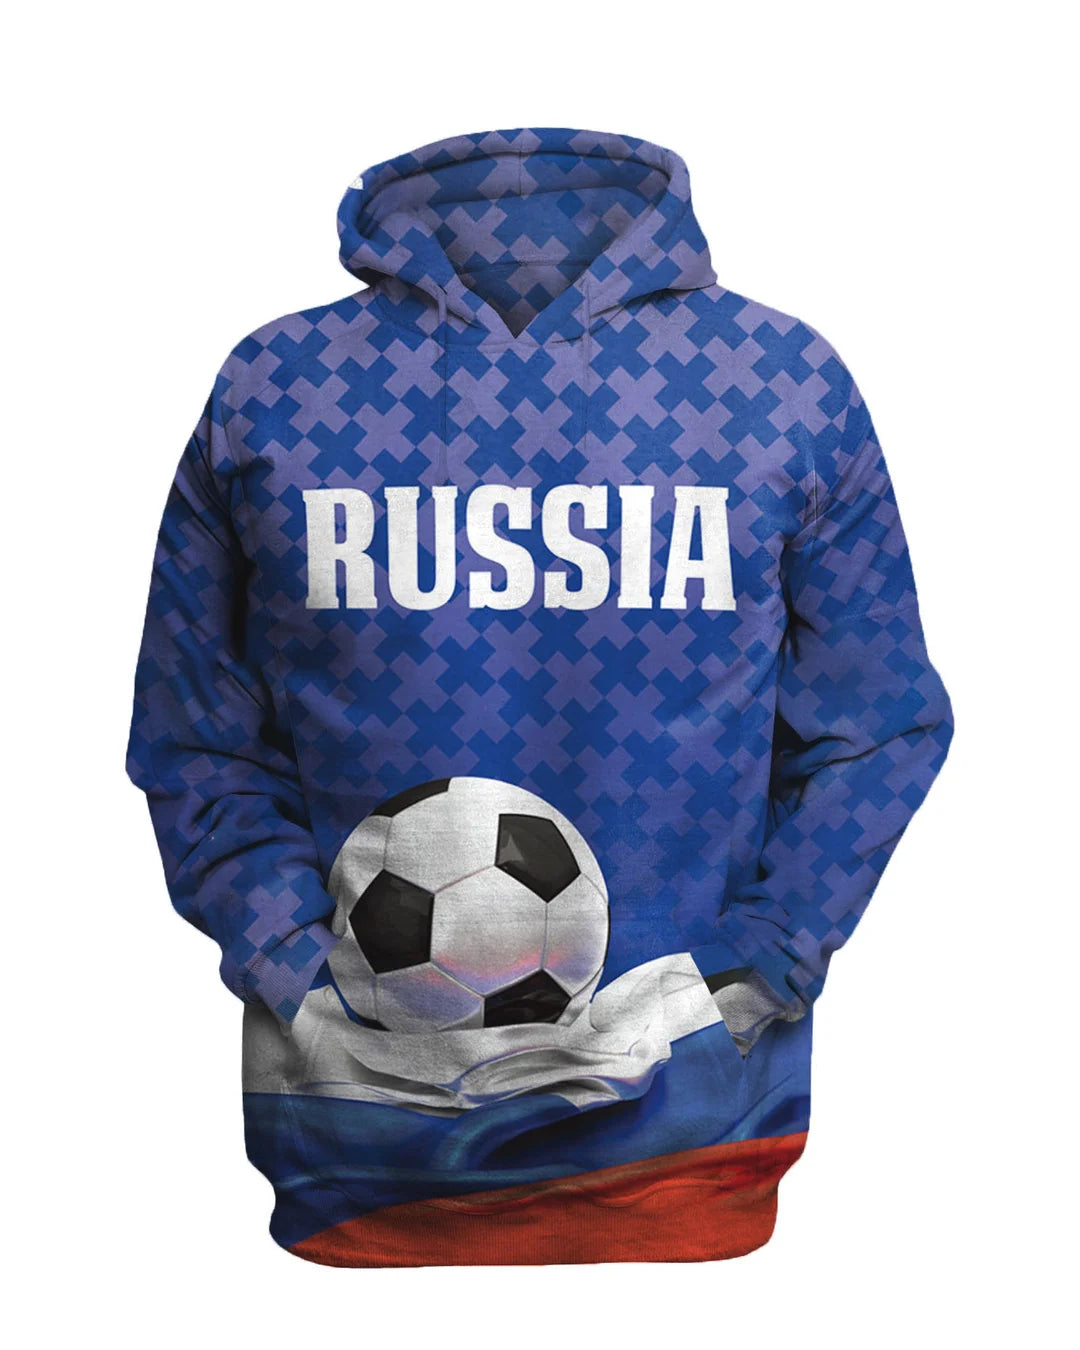 Russia National Football Team Printed Sweatshirt Set